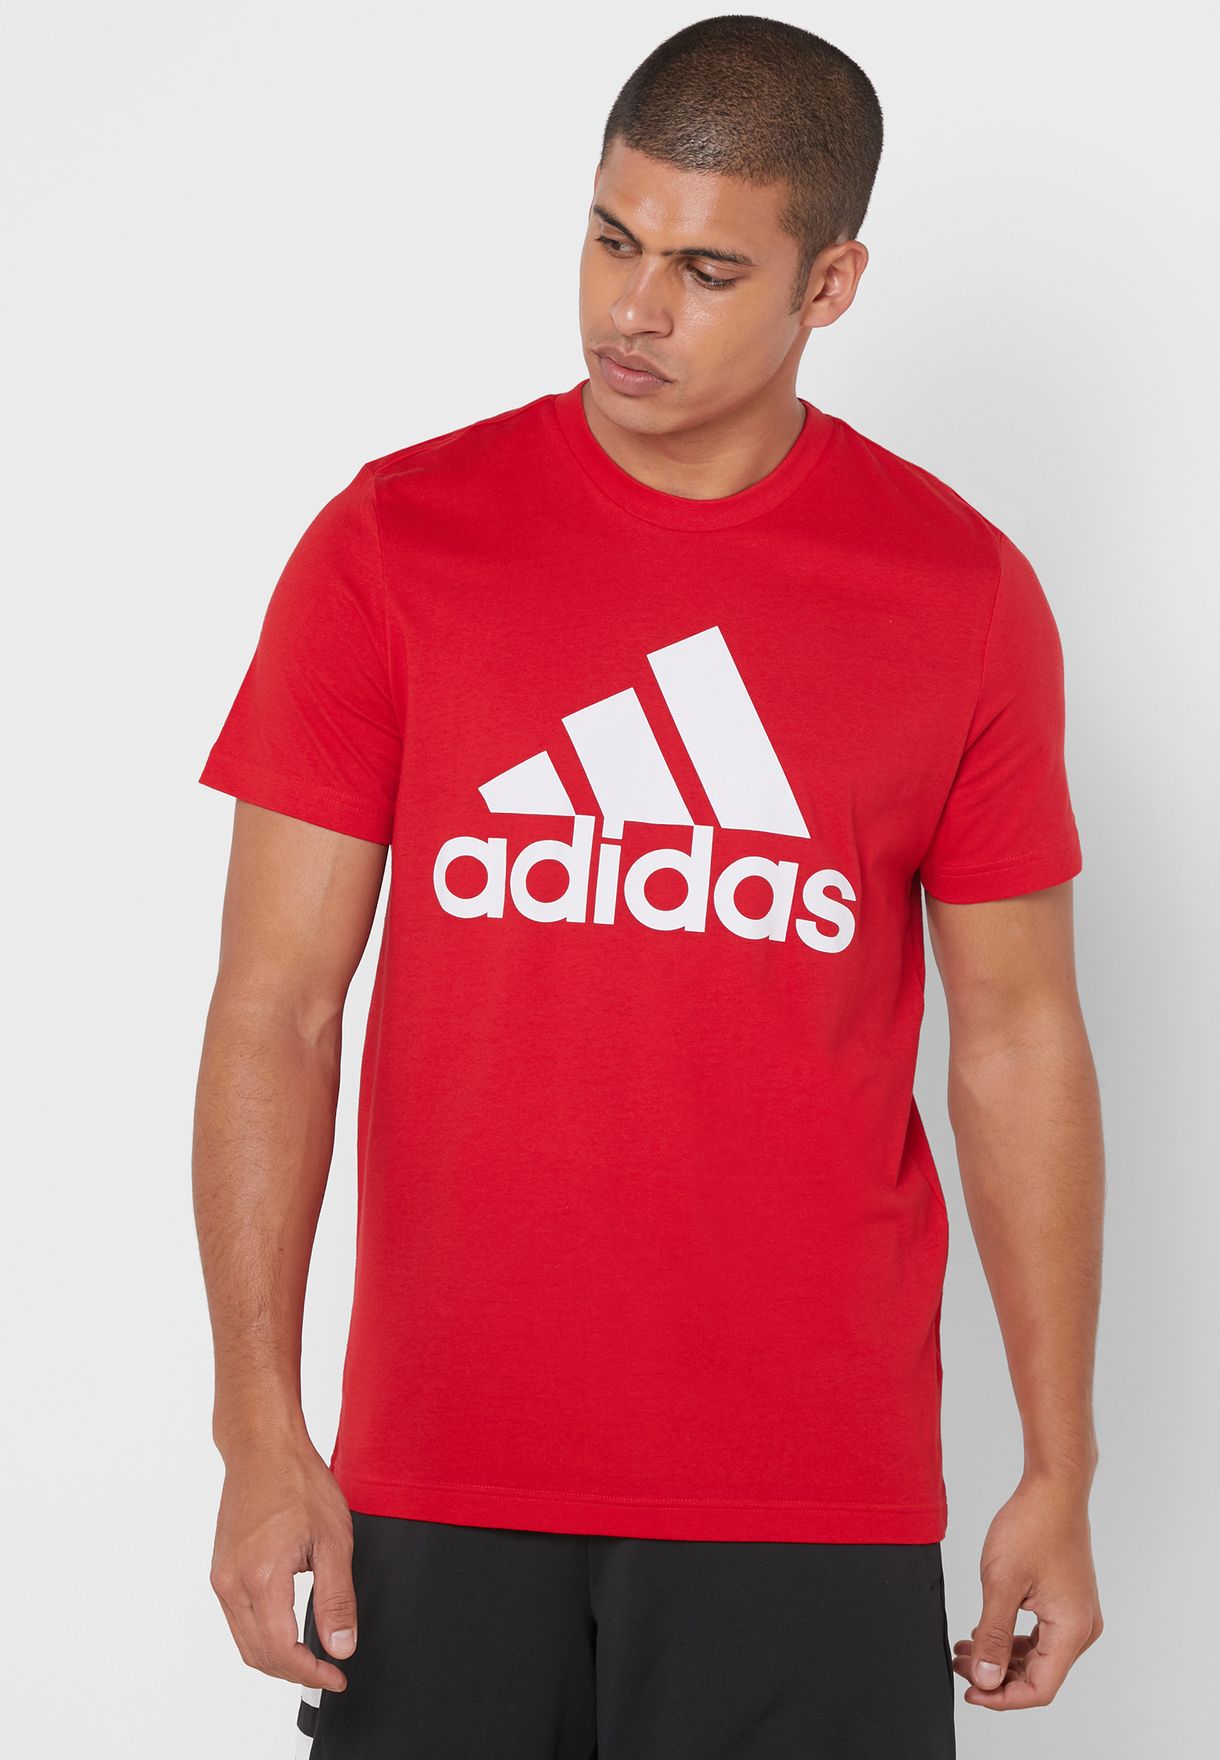 adidas red tee shirt